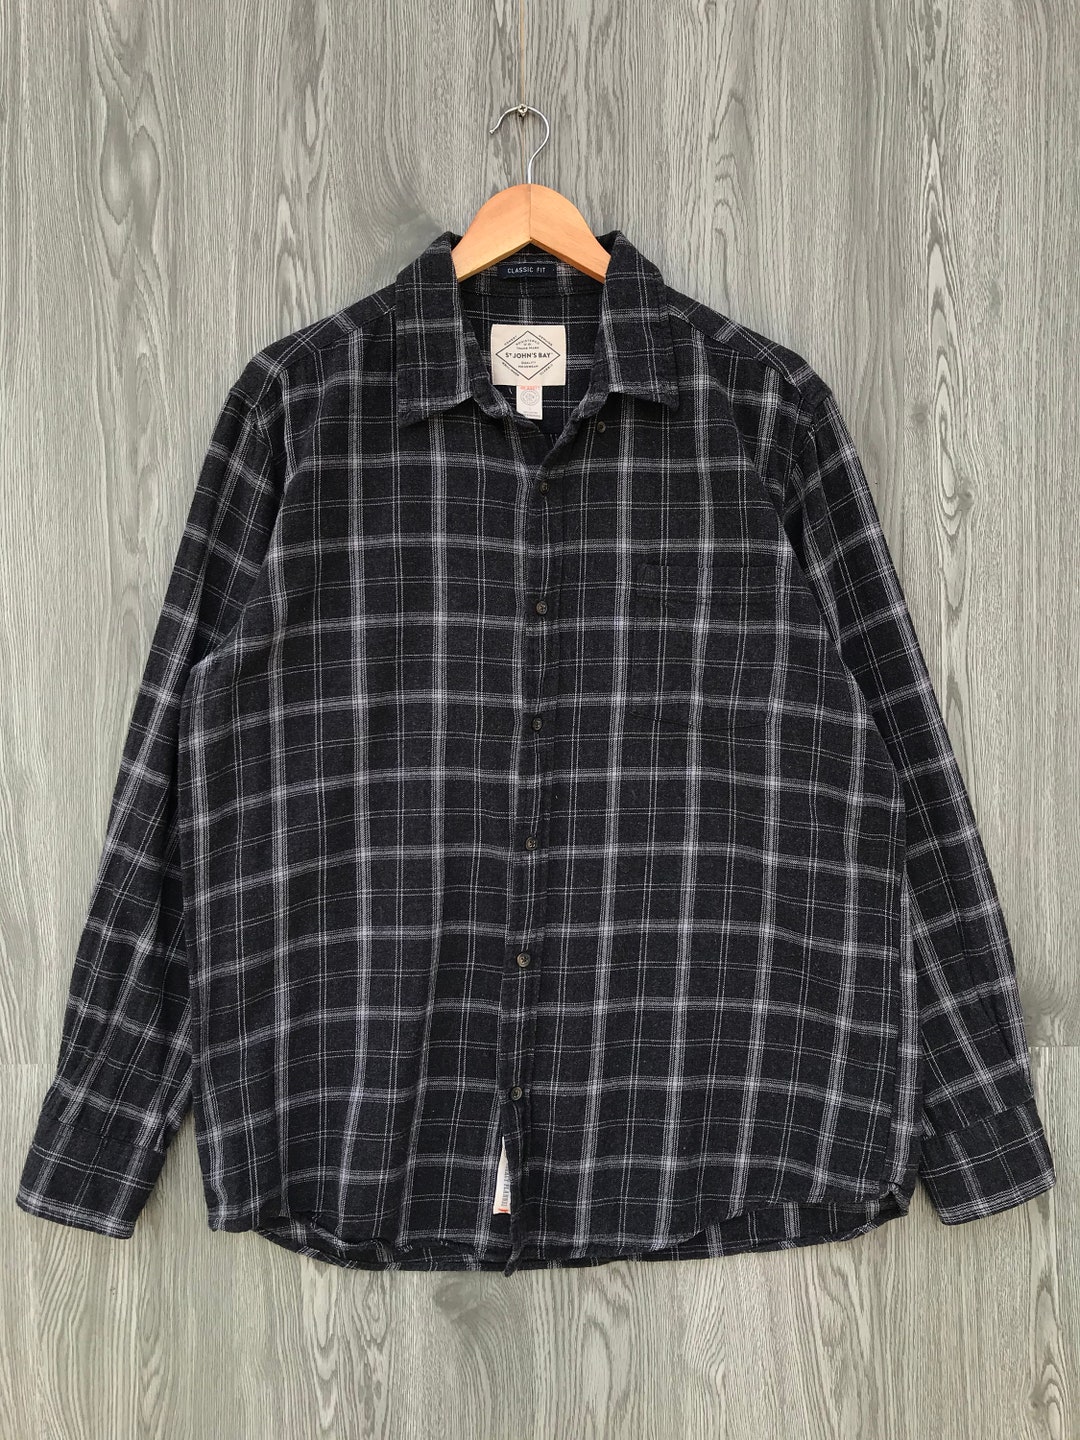 Vintage ST JOHN'S BAY Checkered Shirt Large 1990s Plaid - Etsy